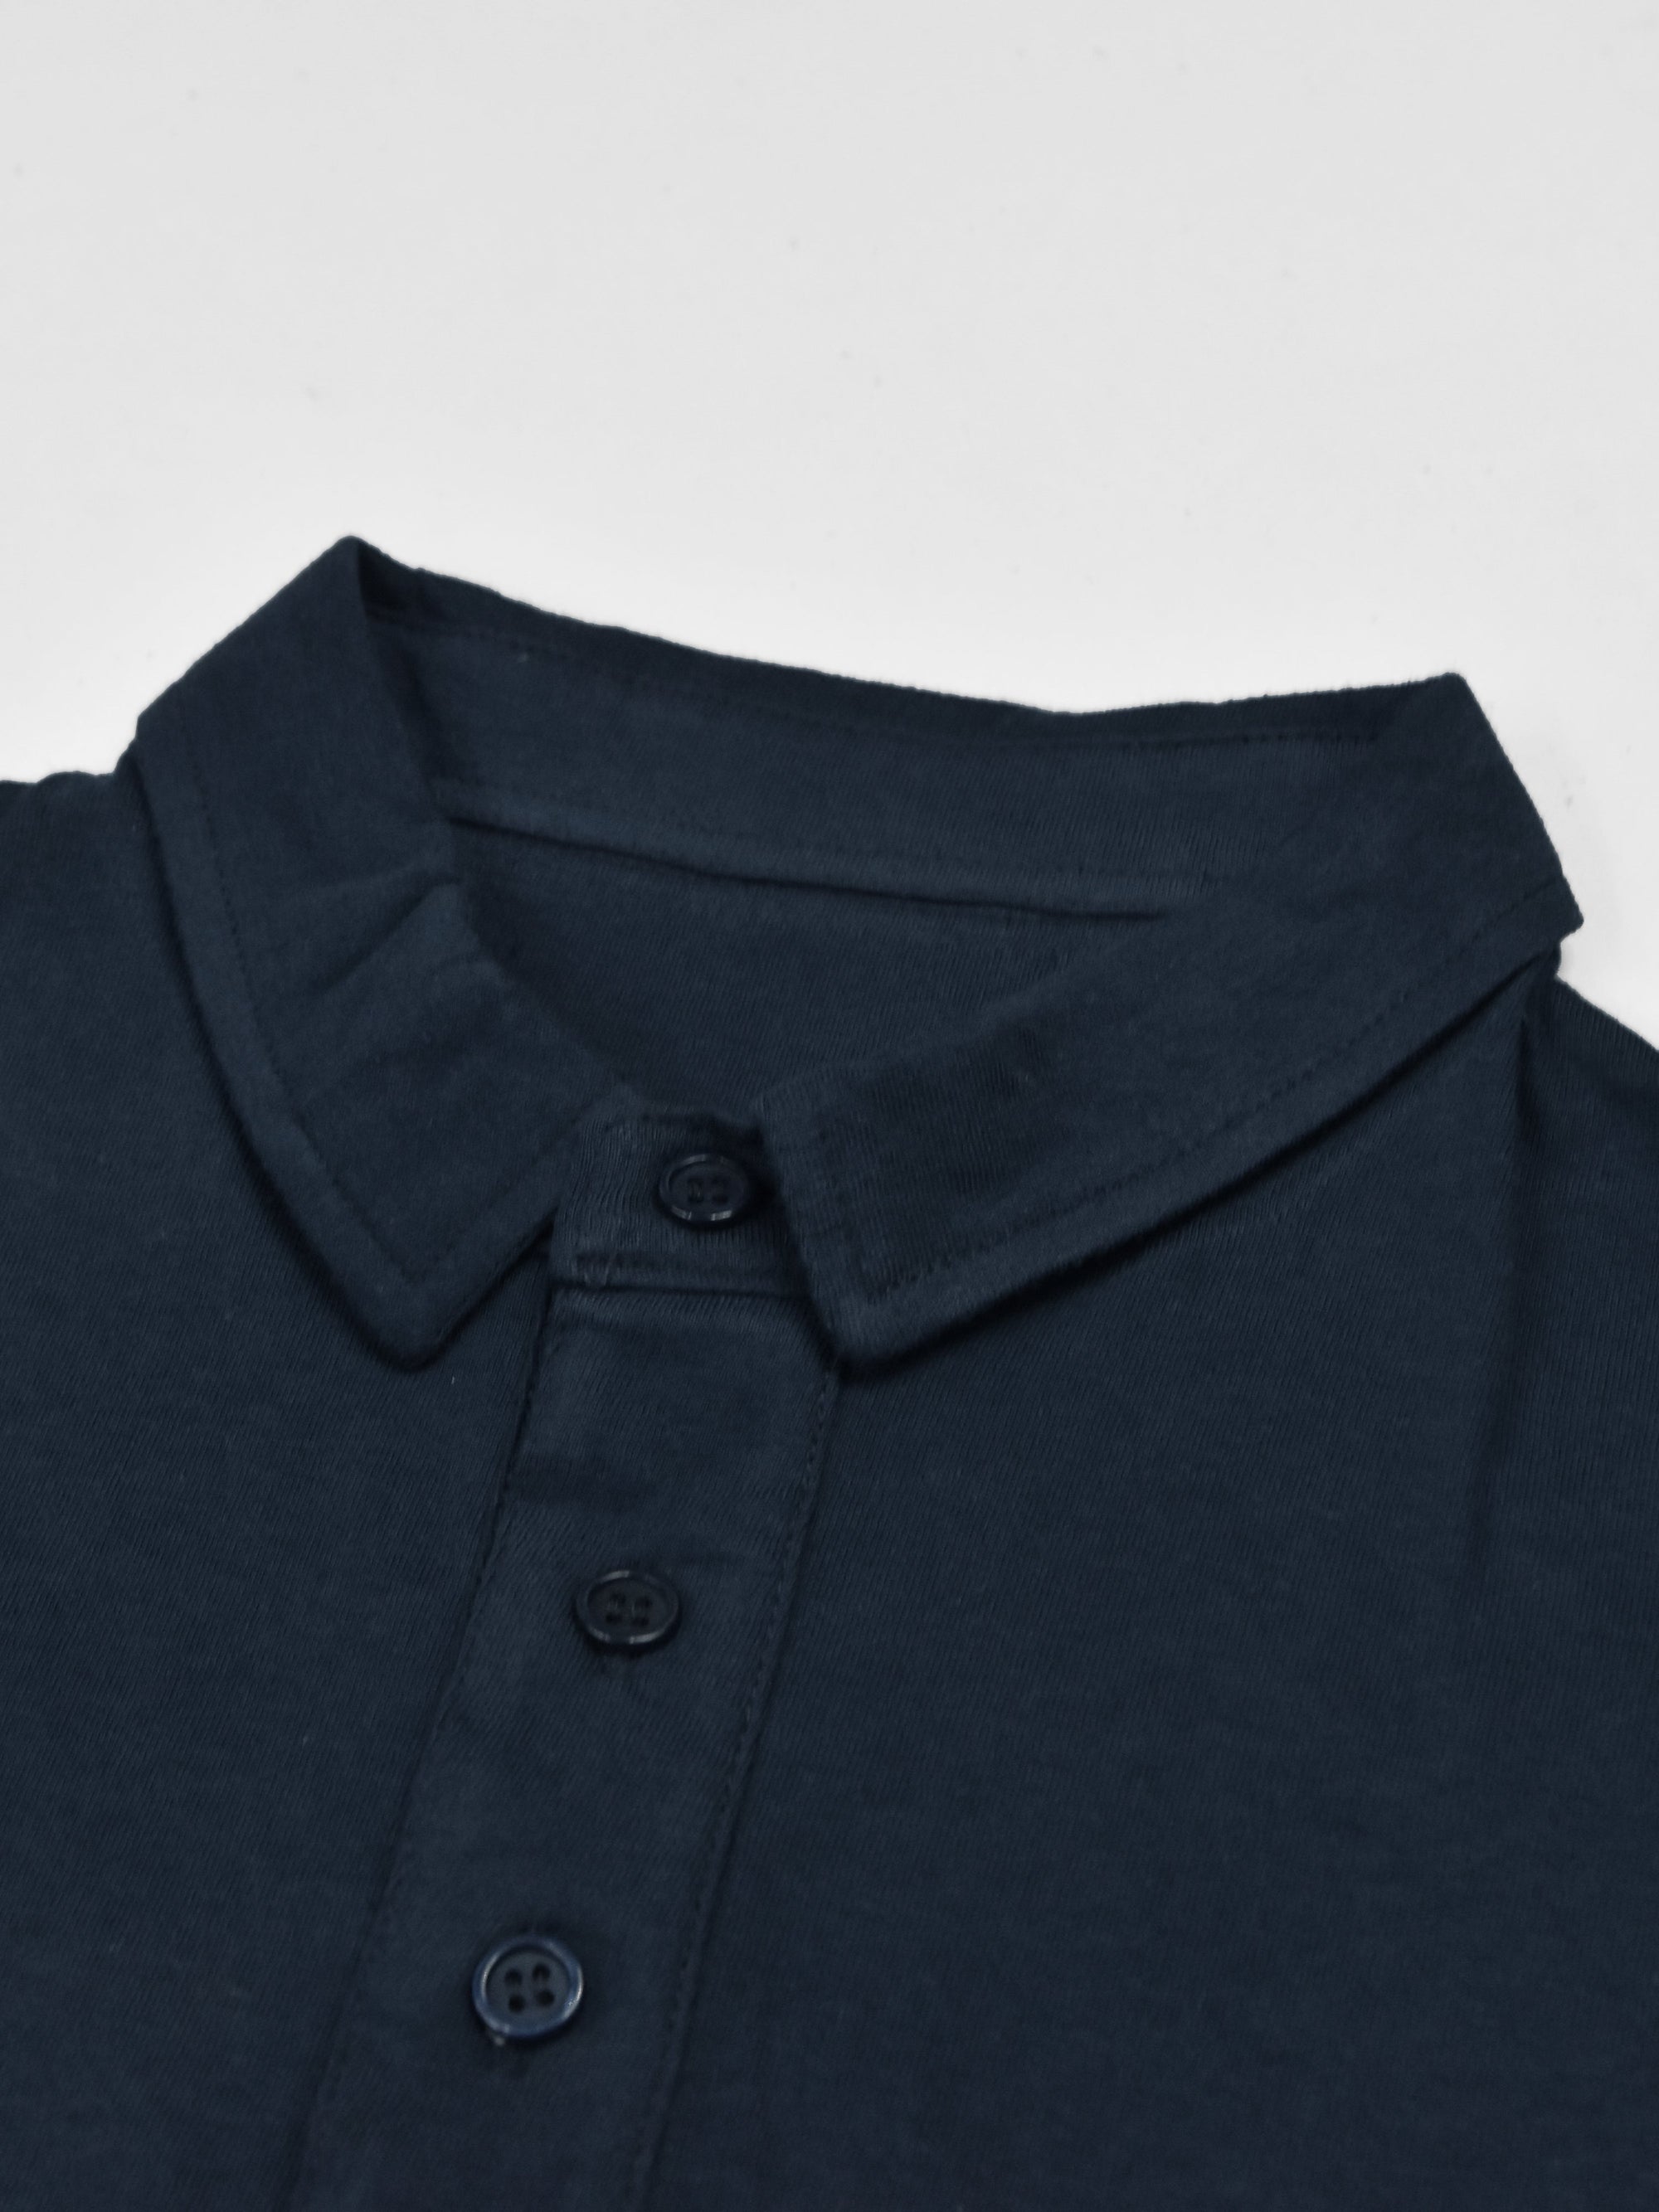 Summer Polo Shirt For Men-Navy with Maroon & Grey Melange-RT772 - BrandsEgo